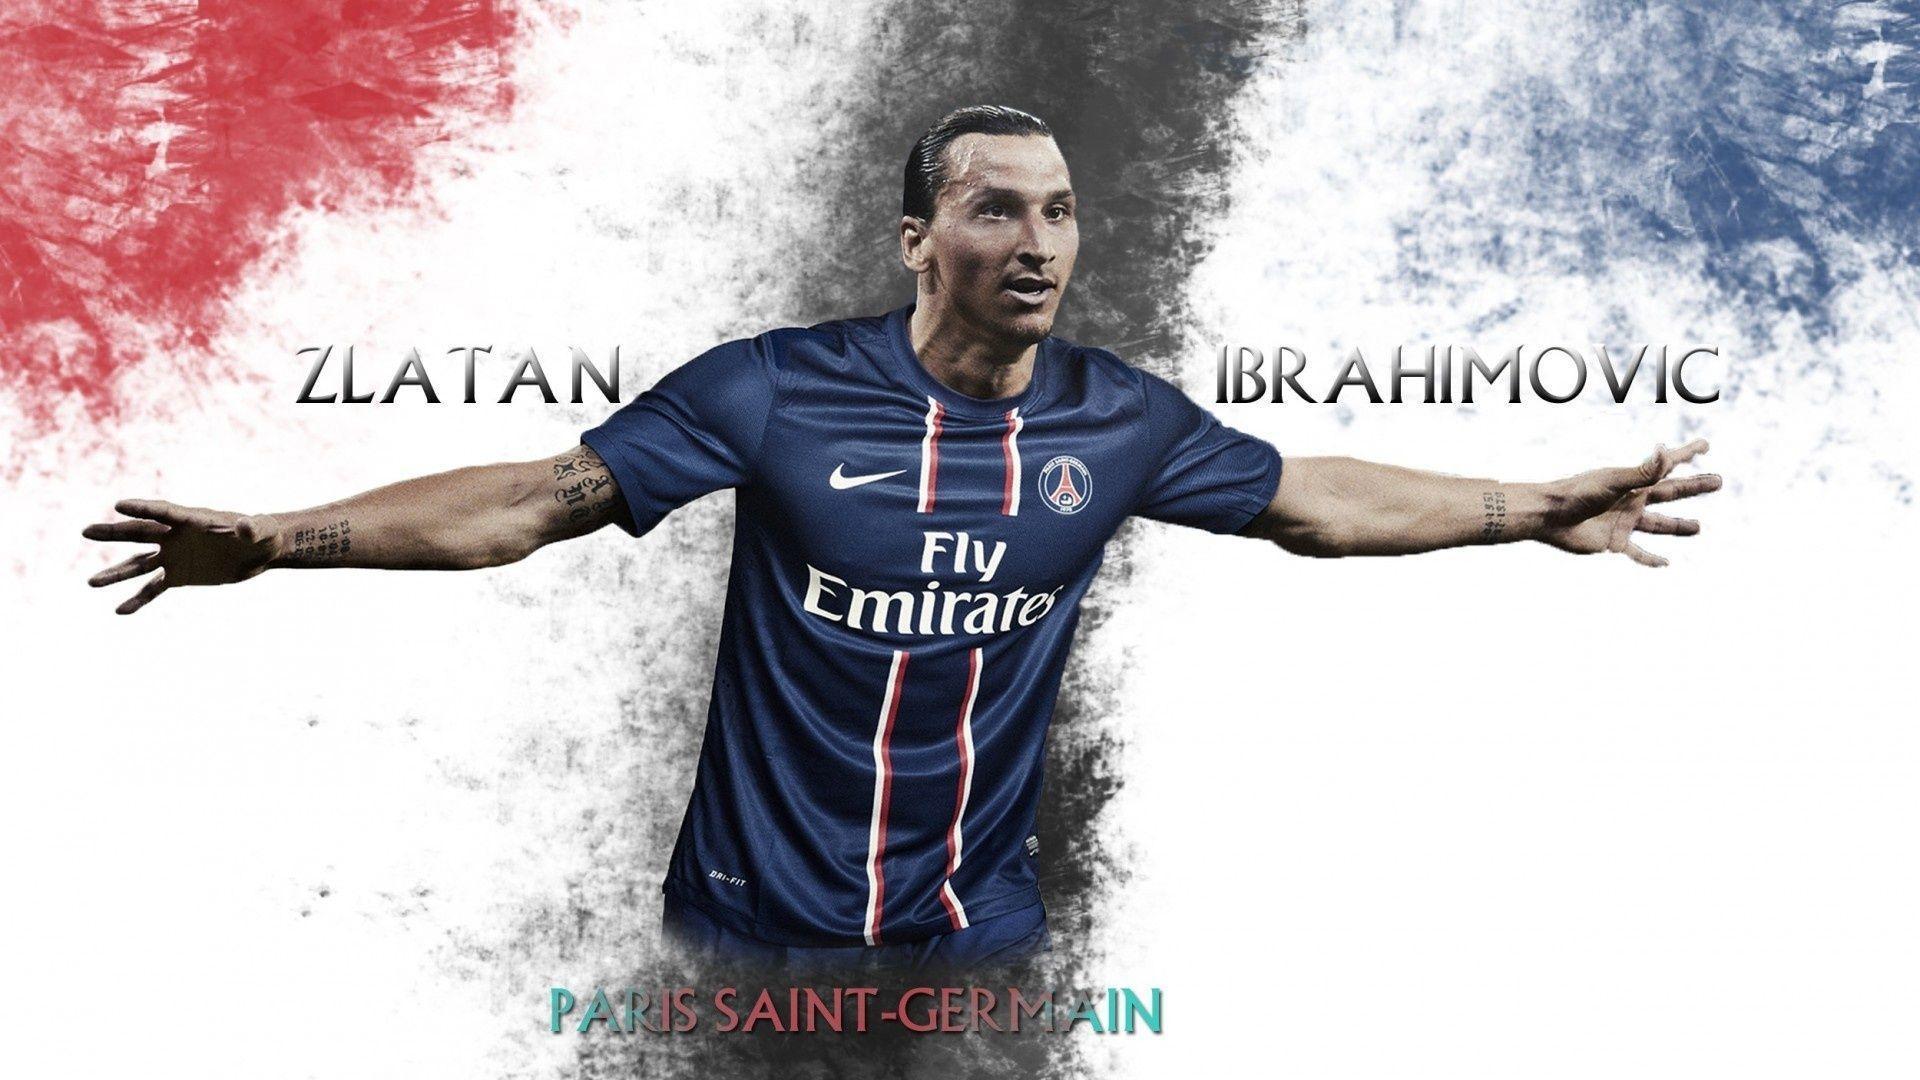 Football, Zlatan Ibrahimovic, Soccer, Psg, Paris Saint